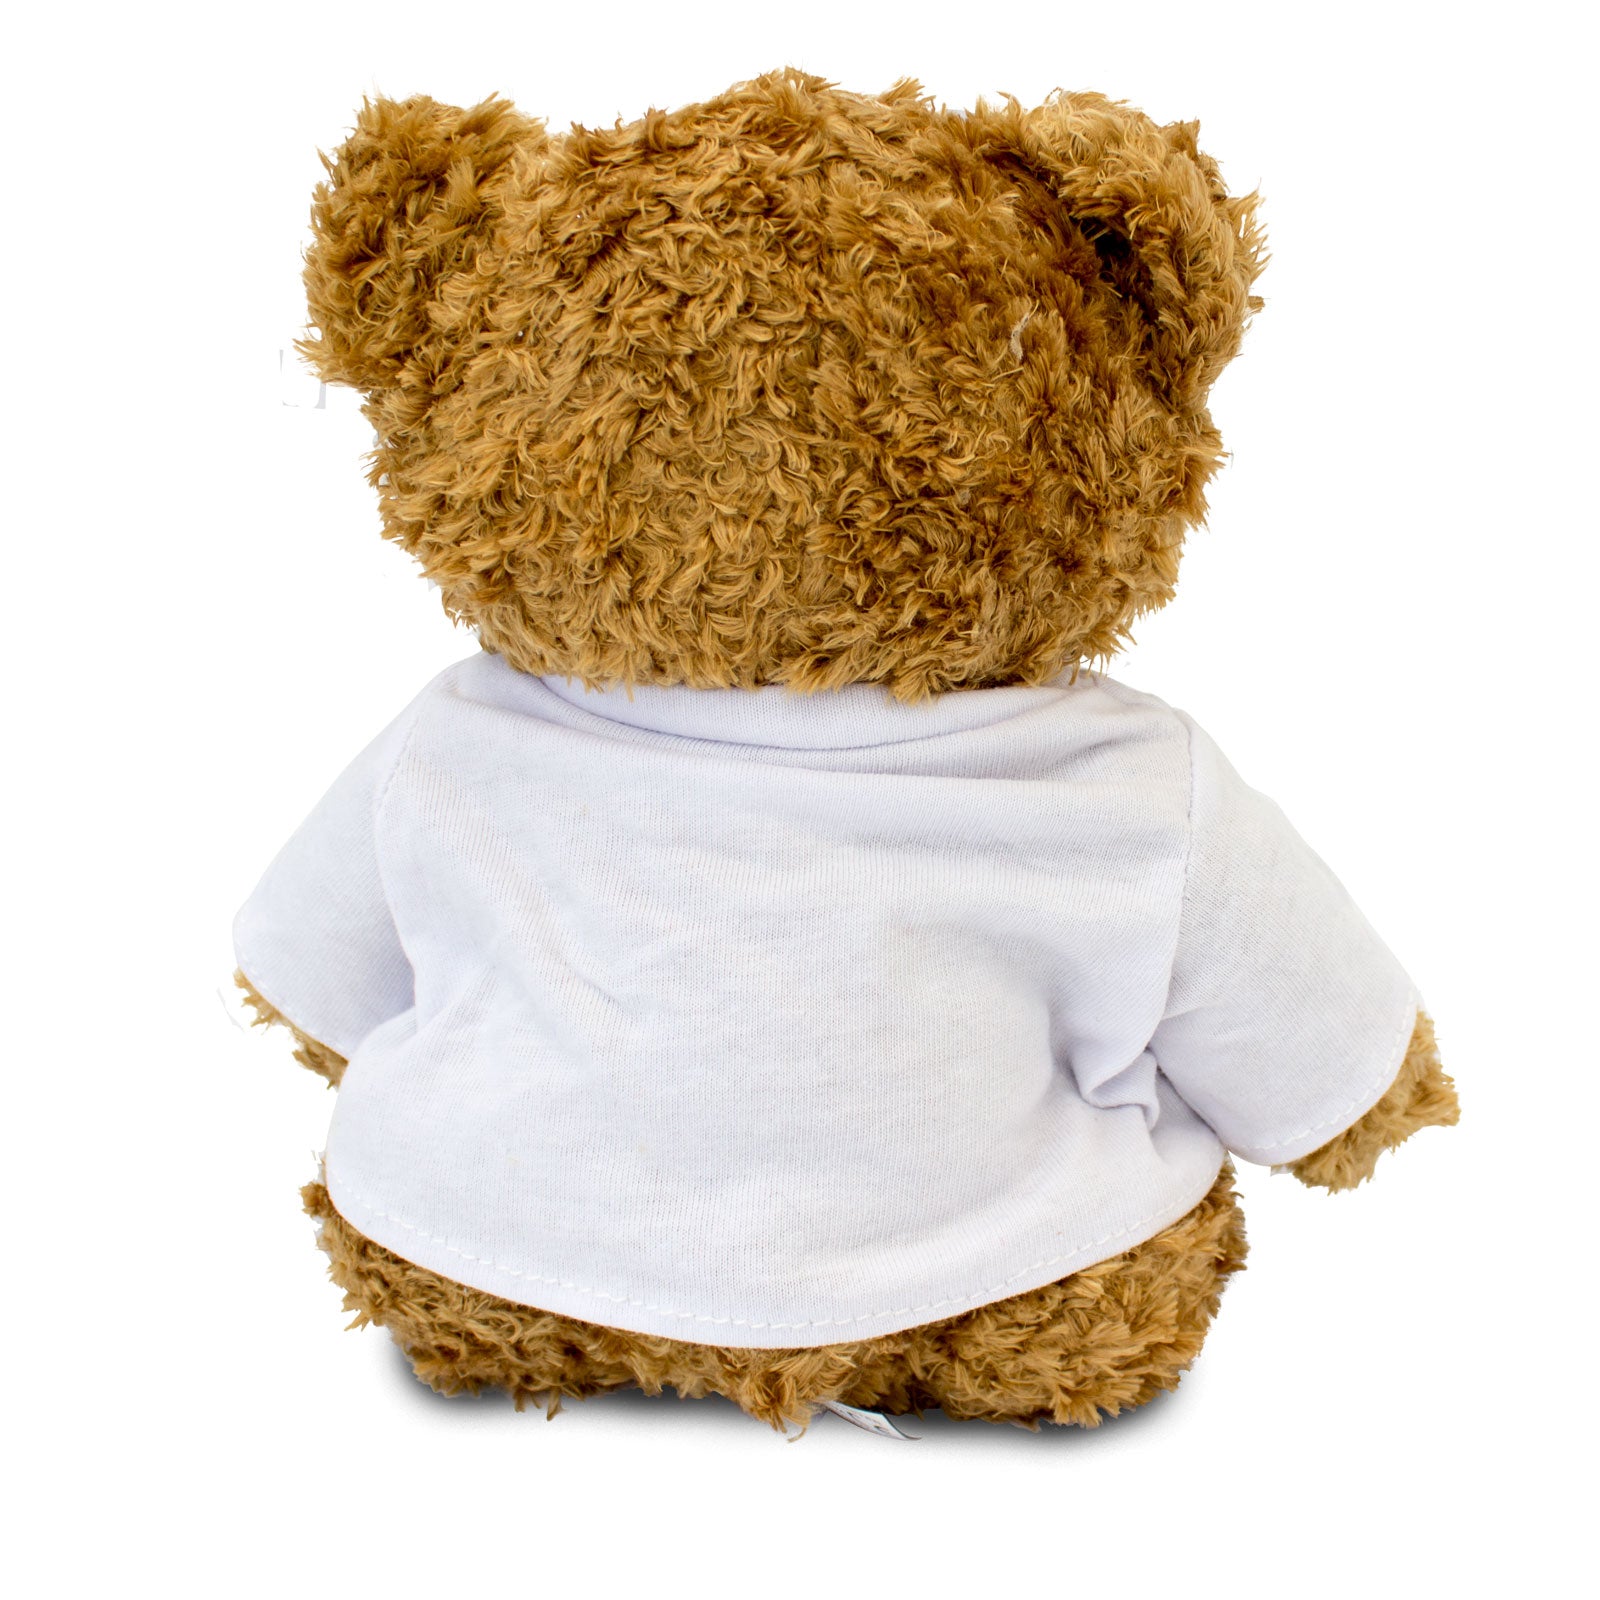 Get Well Soon Papa - Teddy Bear